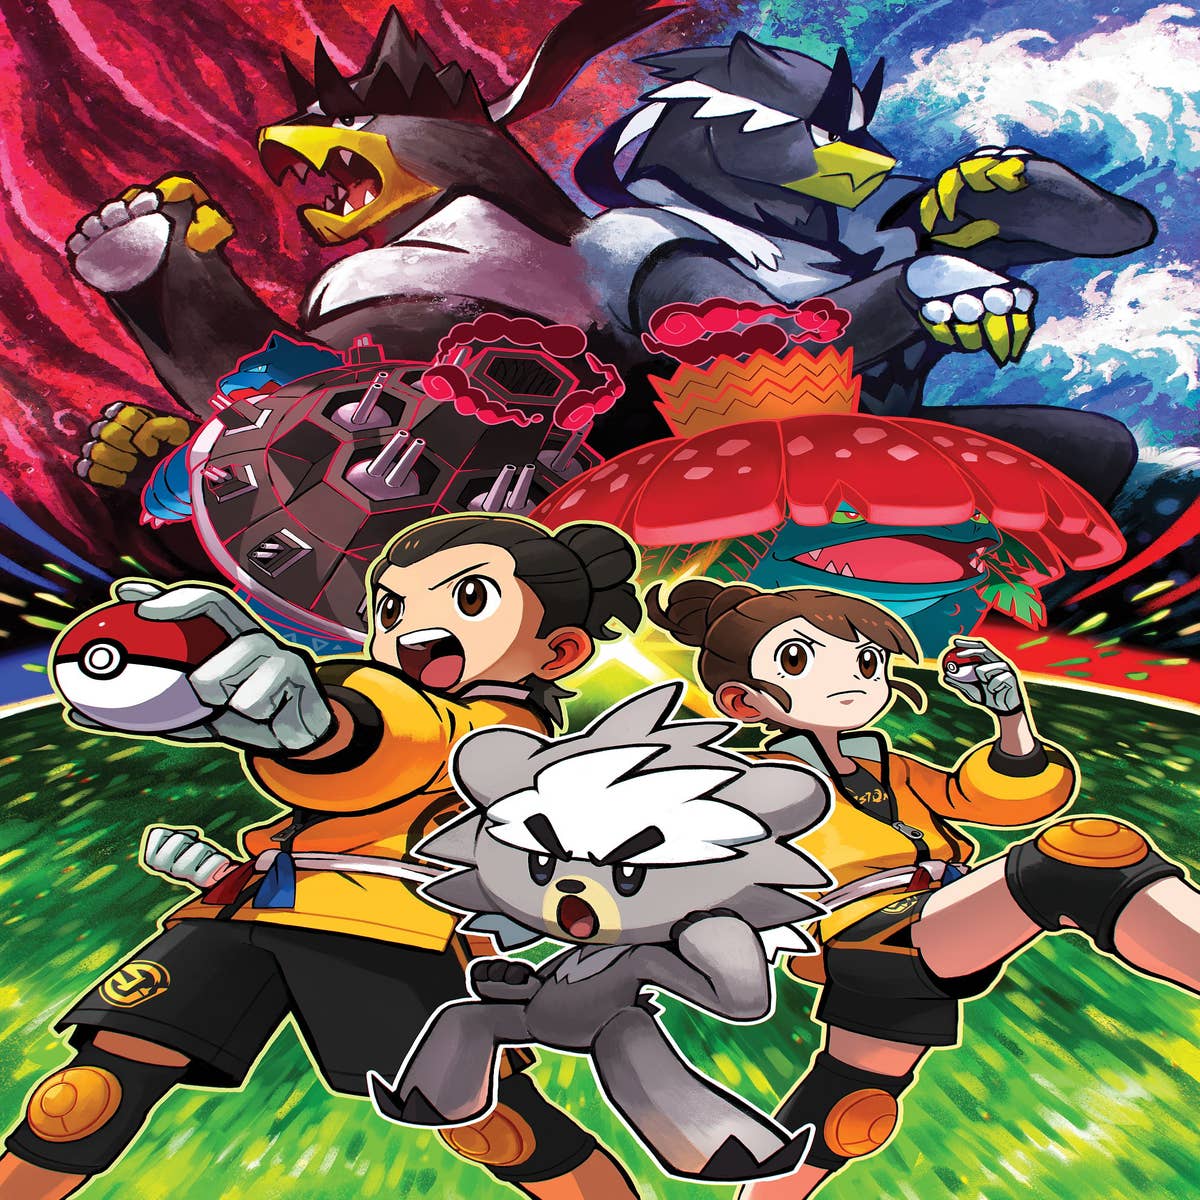 A Critical Review of Pokémon's Isle of Armor DLC - Epilogue Gaming